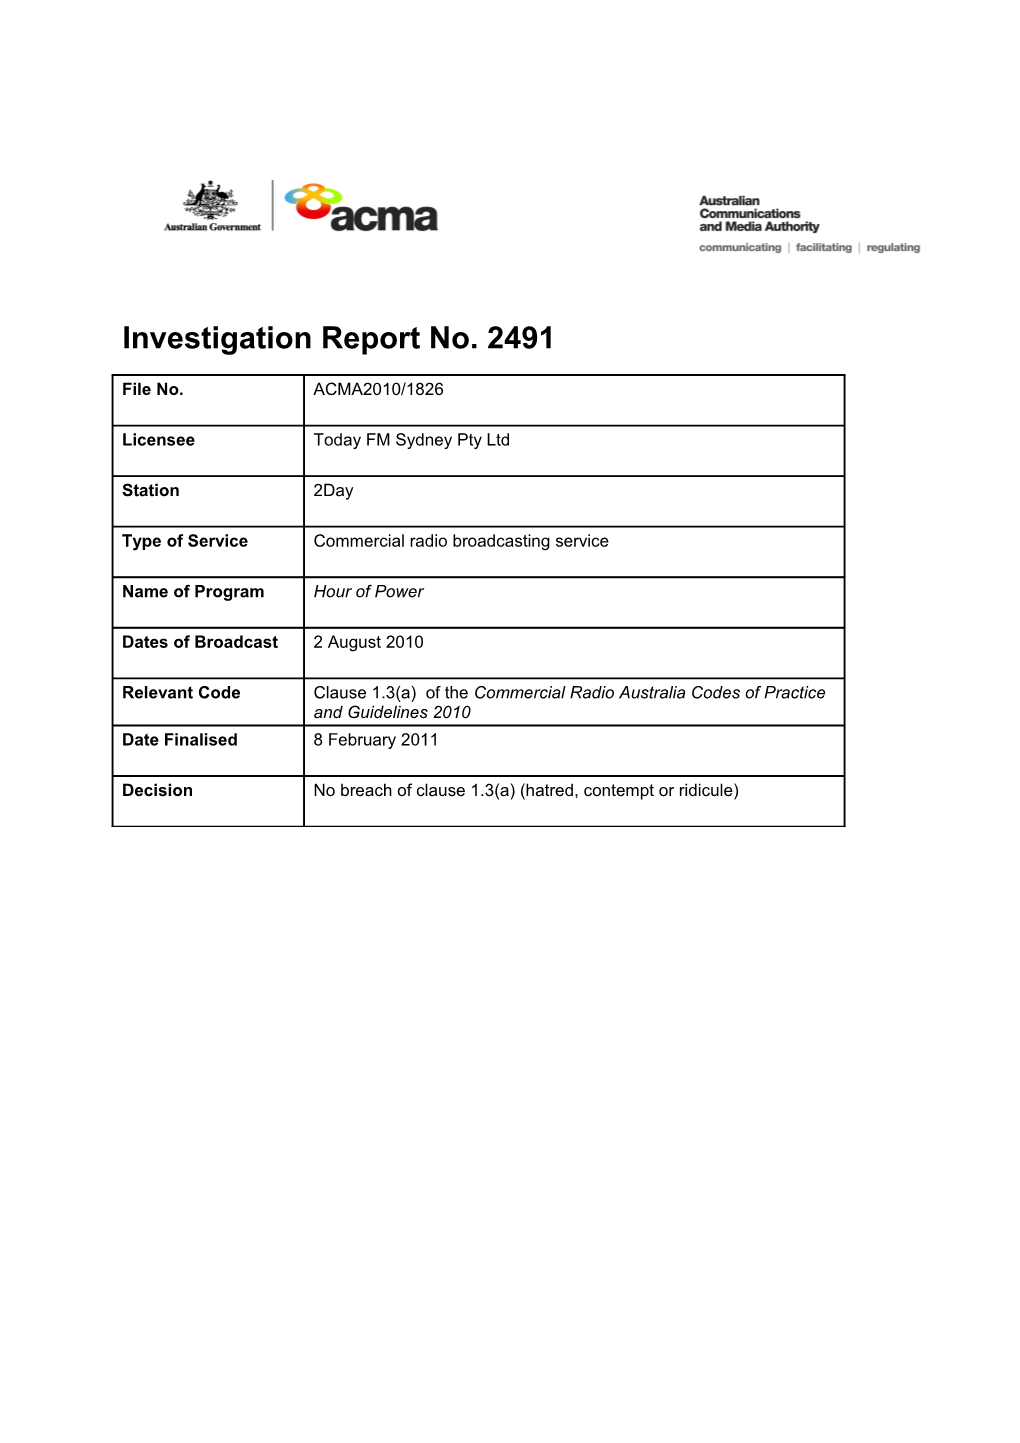 2DAY - ACMA Investigation Report 2491